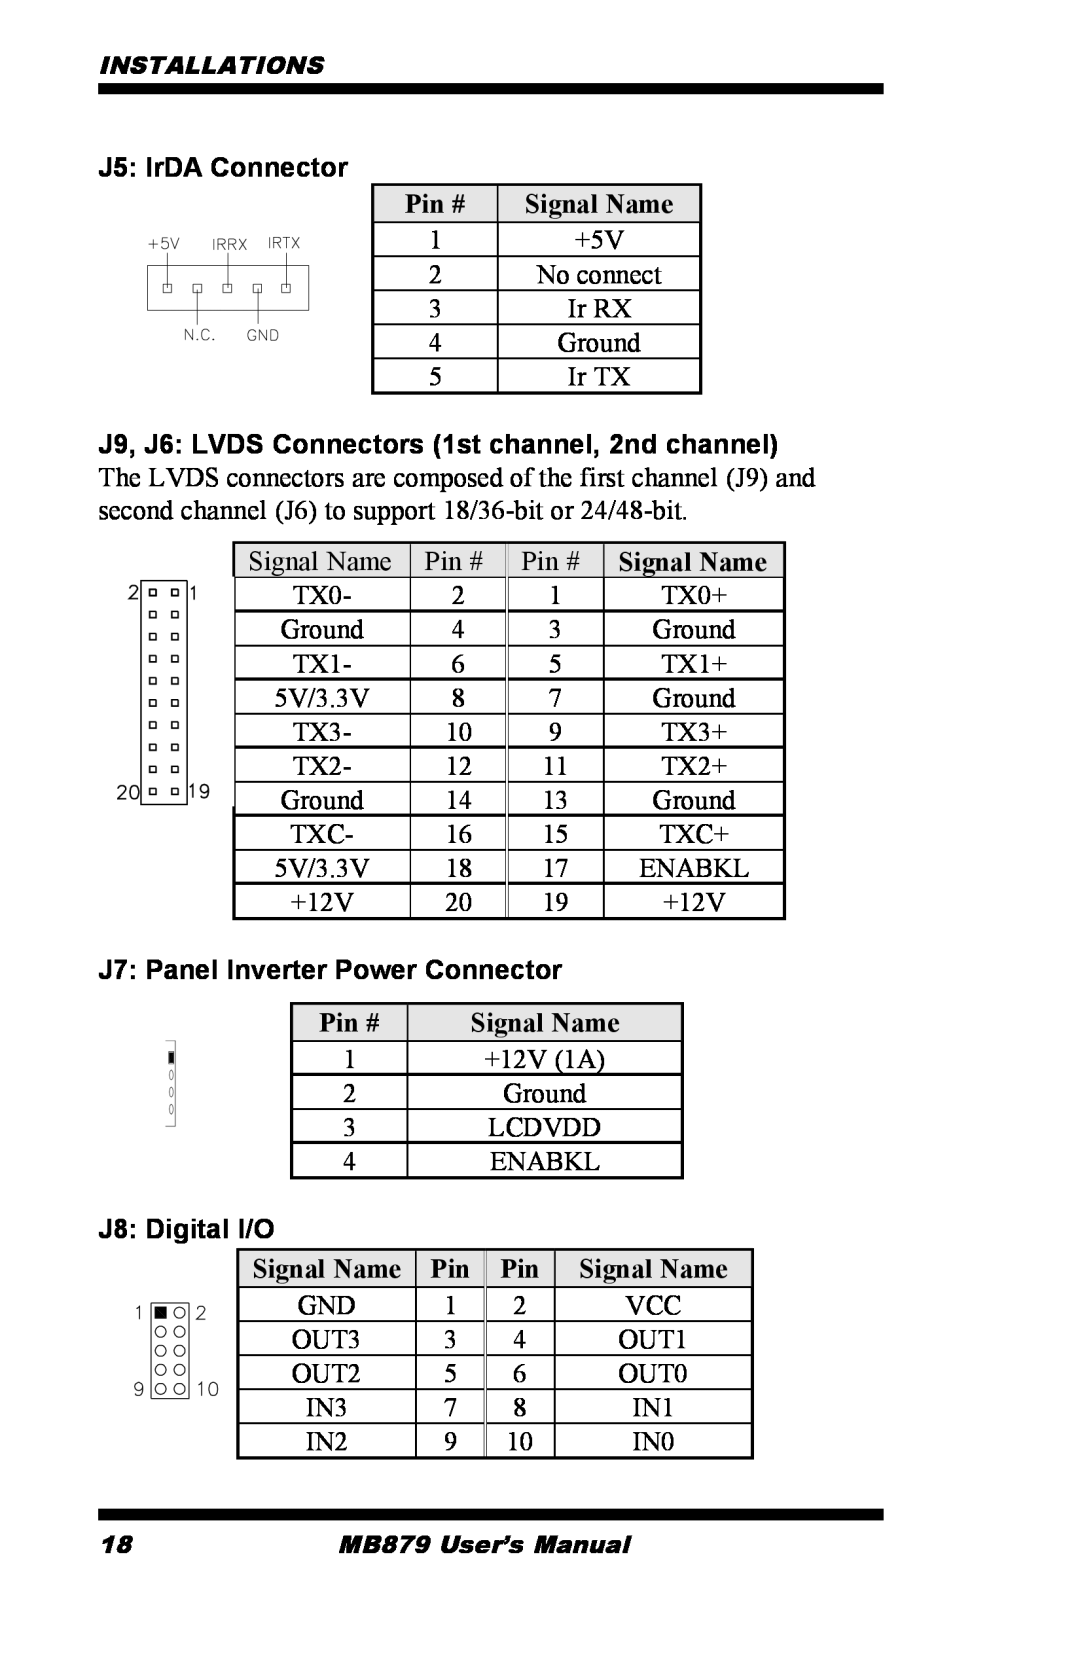 Intel MB879 user manual J5 IrDA Connector, J7 Panel Inverter Power Connector, J8 Digital I/O, Pin #, Pin Signal Name 